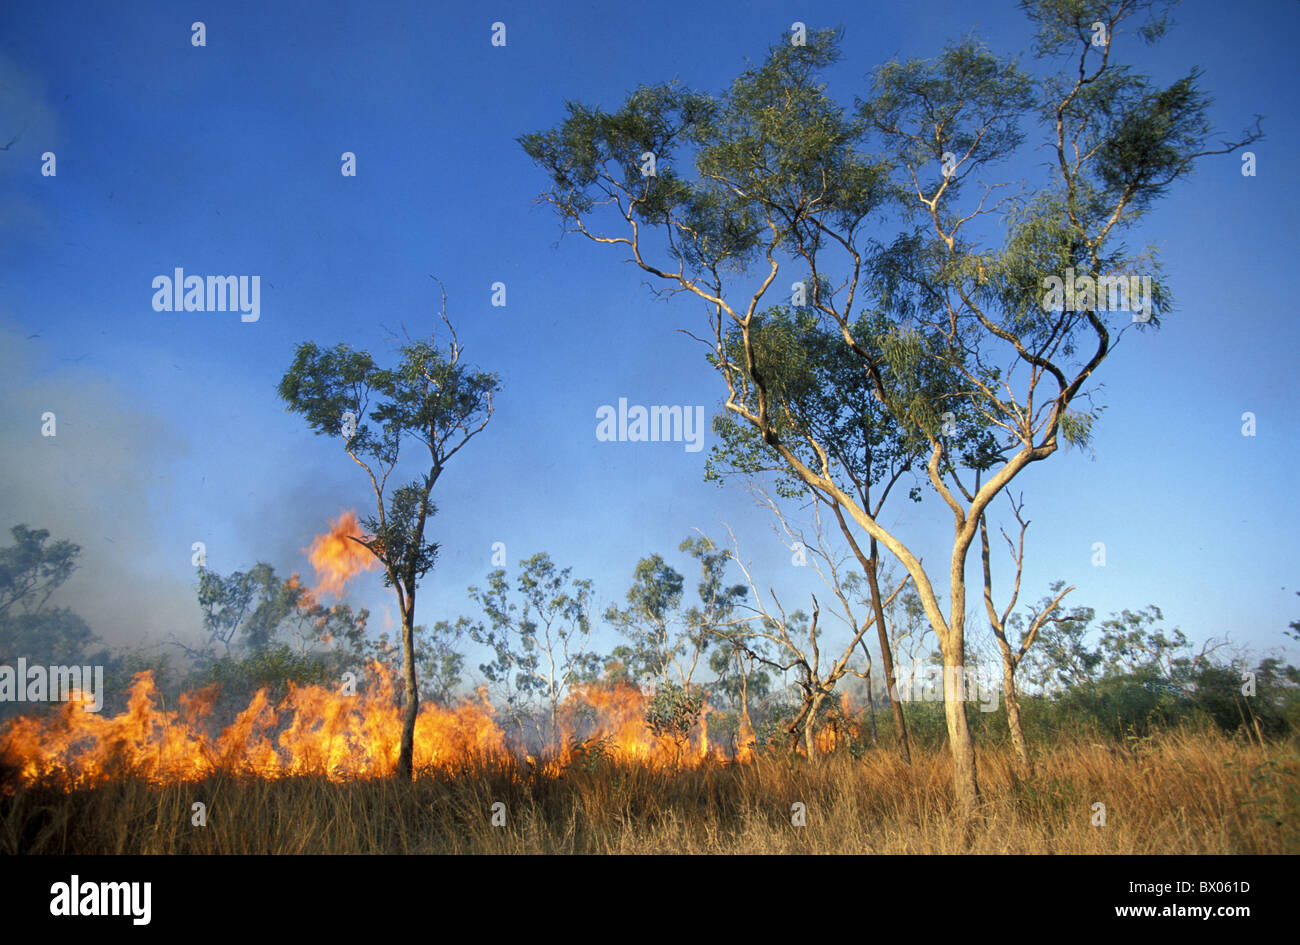 Australia bush fire Bushfire fire flames Gibb River Road outback Kimberley´s trees western Australia Stock Photo